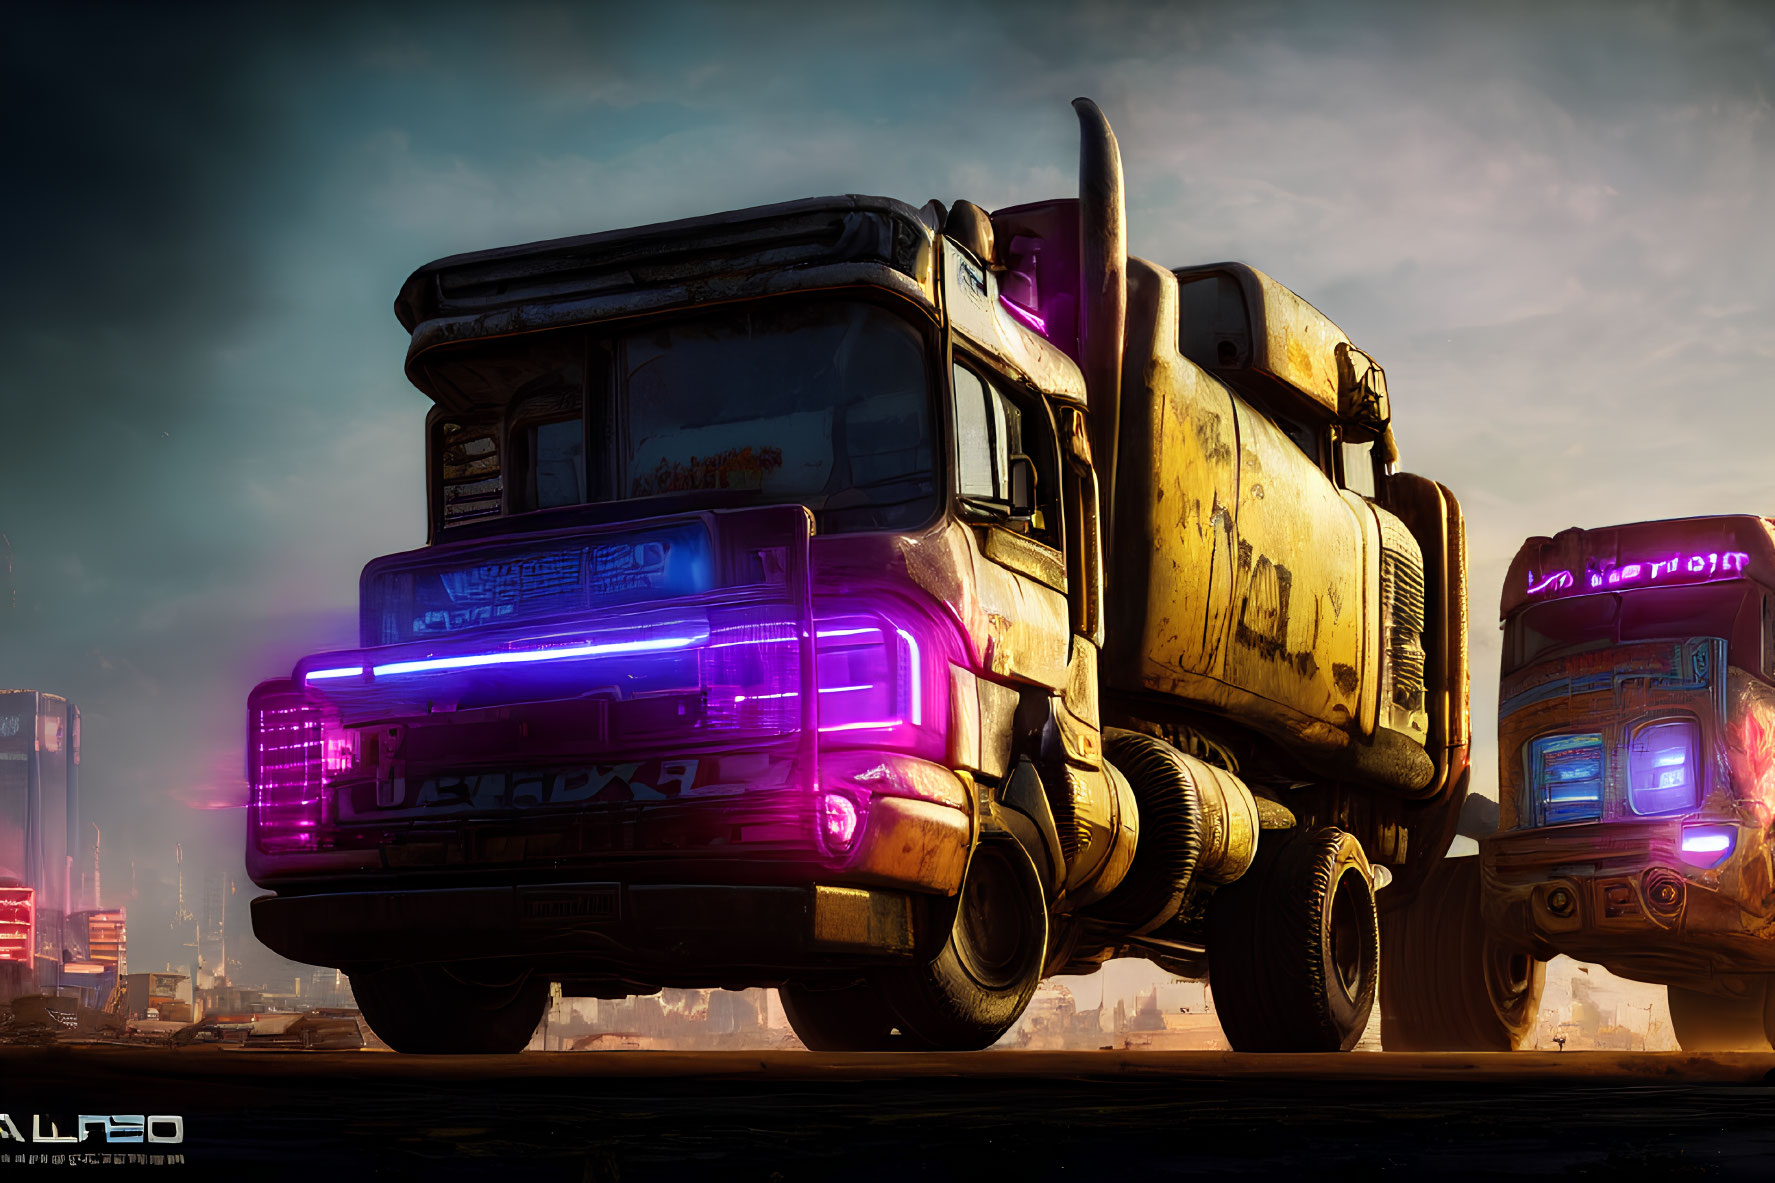 Futuristic trucks with neon lights in dystopian cityscape at twilight